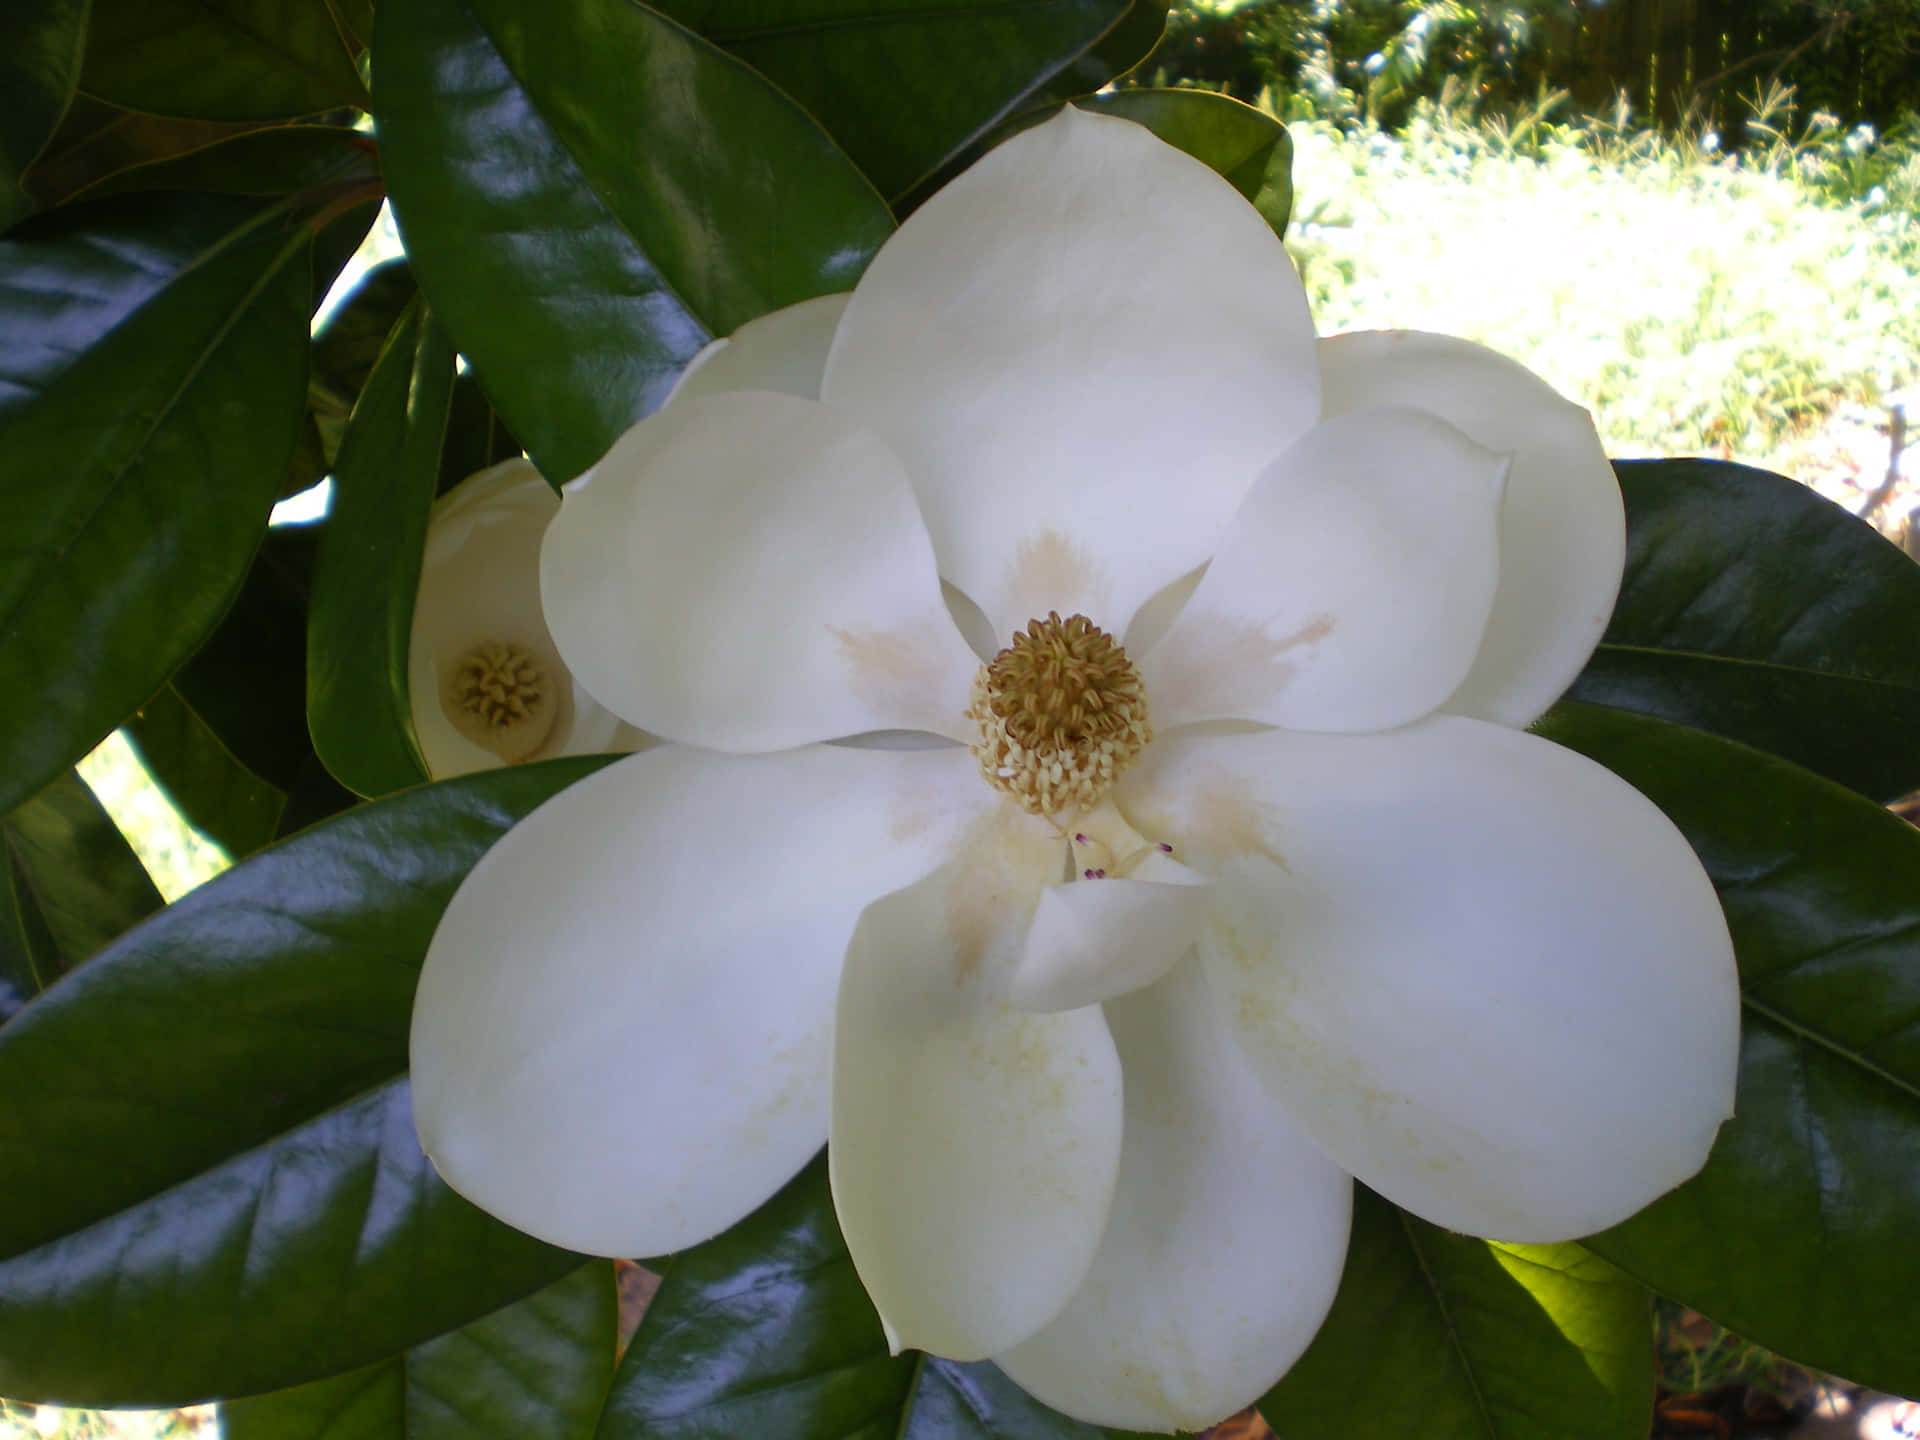 A Magnolia Picture for a Delightful View